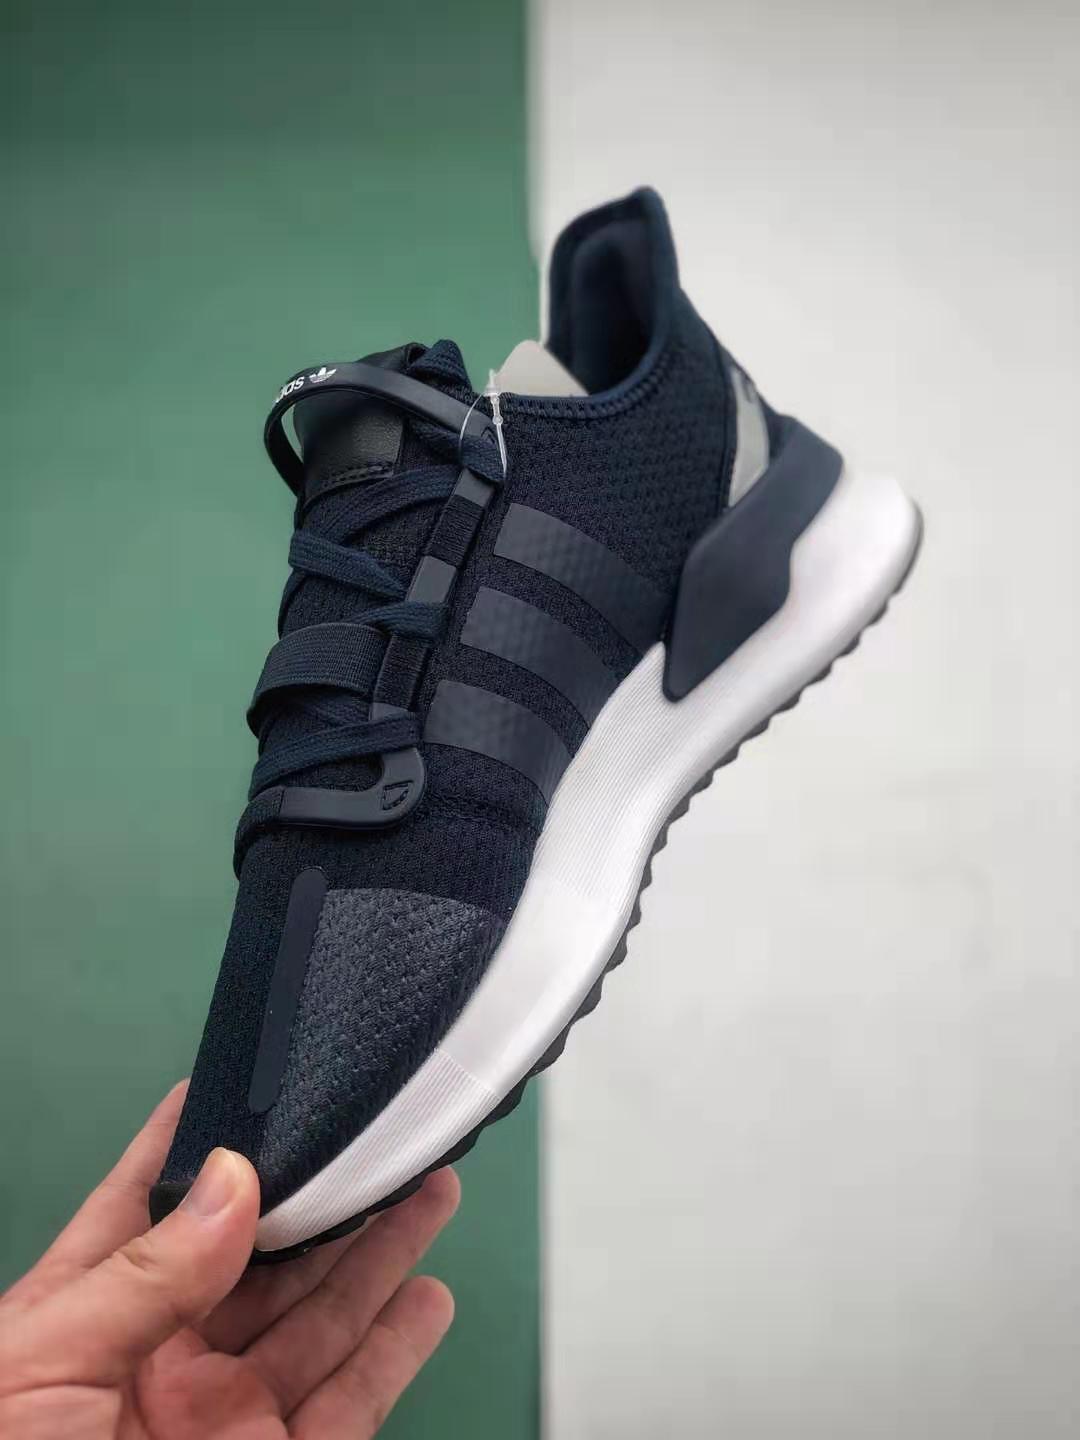 Adidas U_Path Run | Collegiate Navy | EE7162 | Stylish and Comfortable